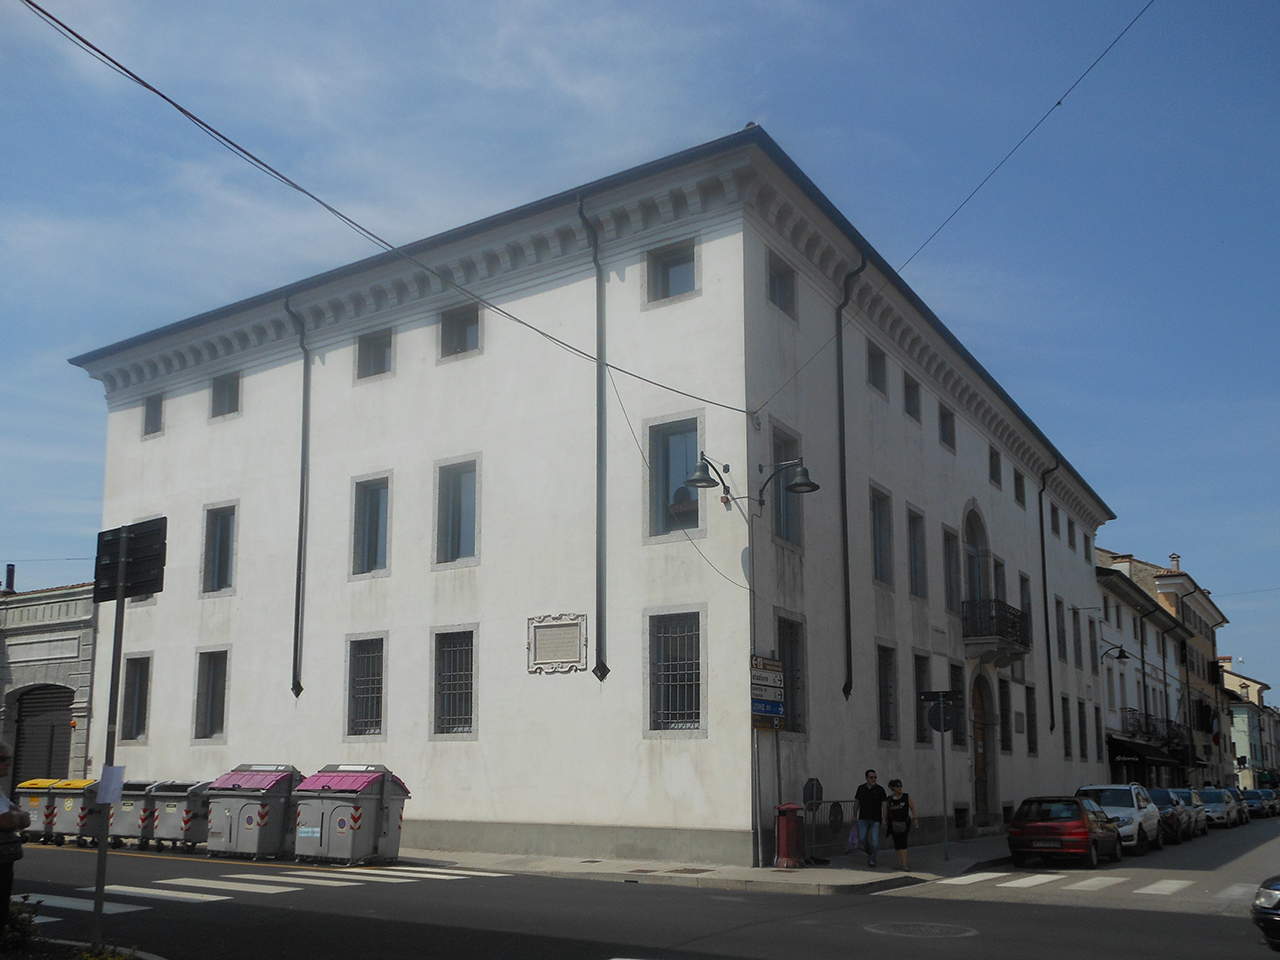 Palazzo del Ragionato (palazzo, tesoreria) - Palmanova (UD) 